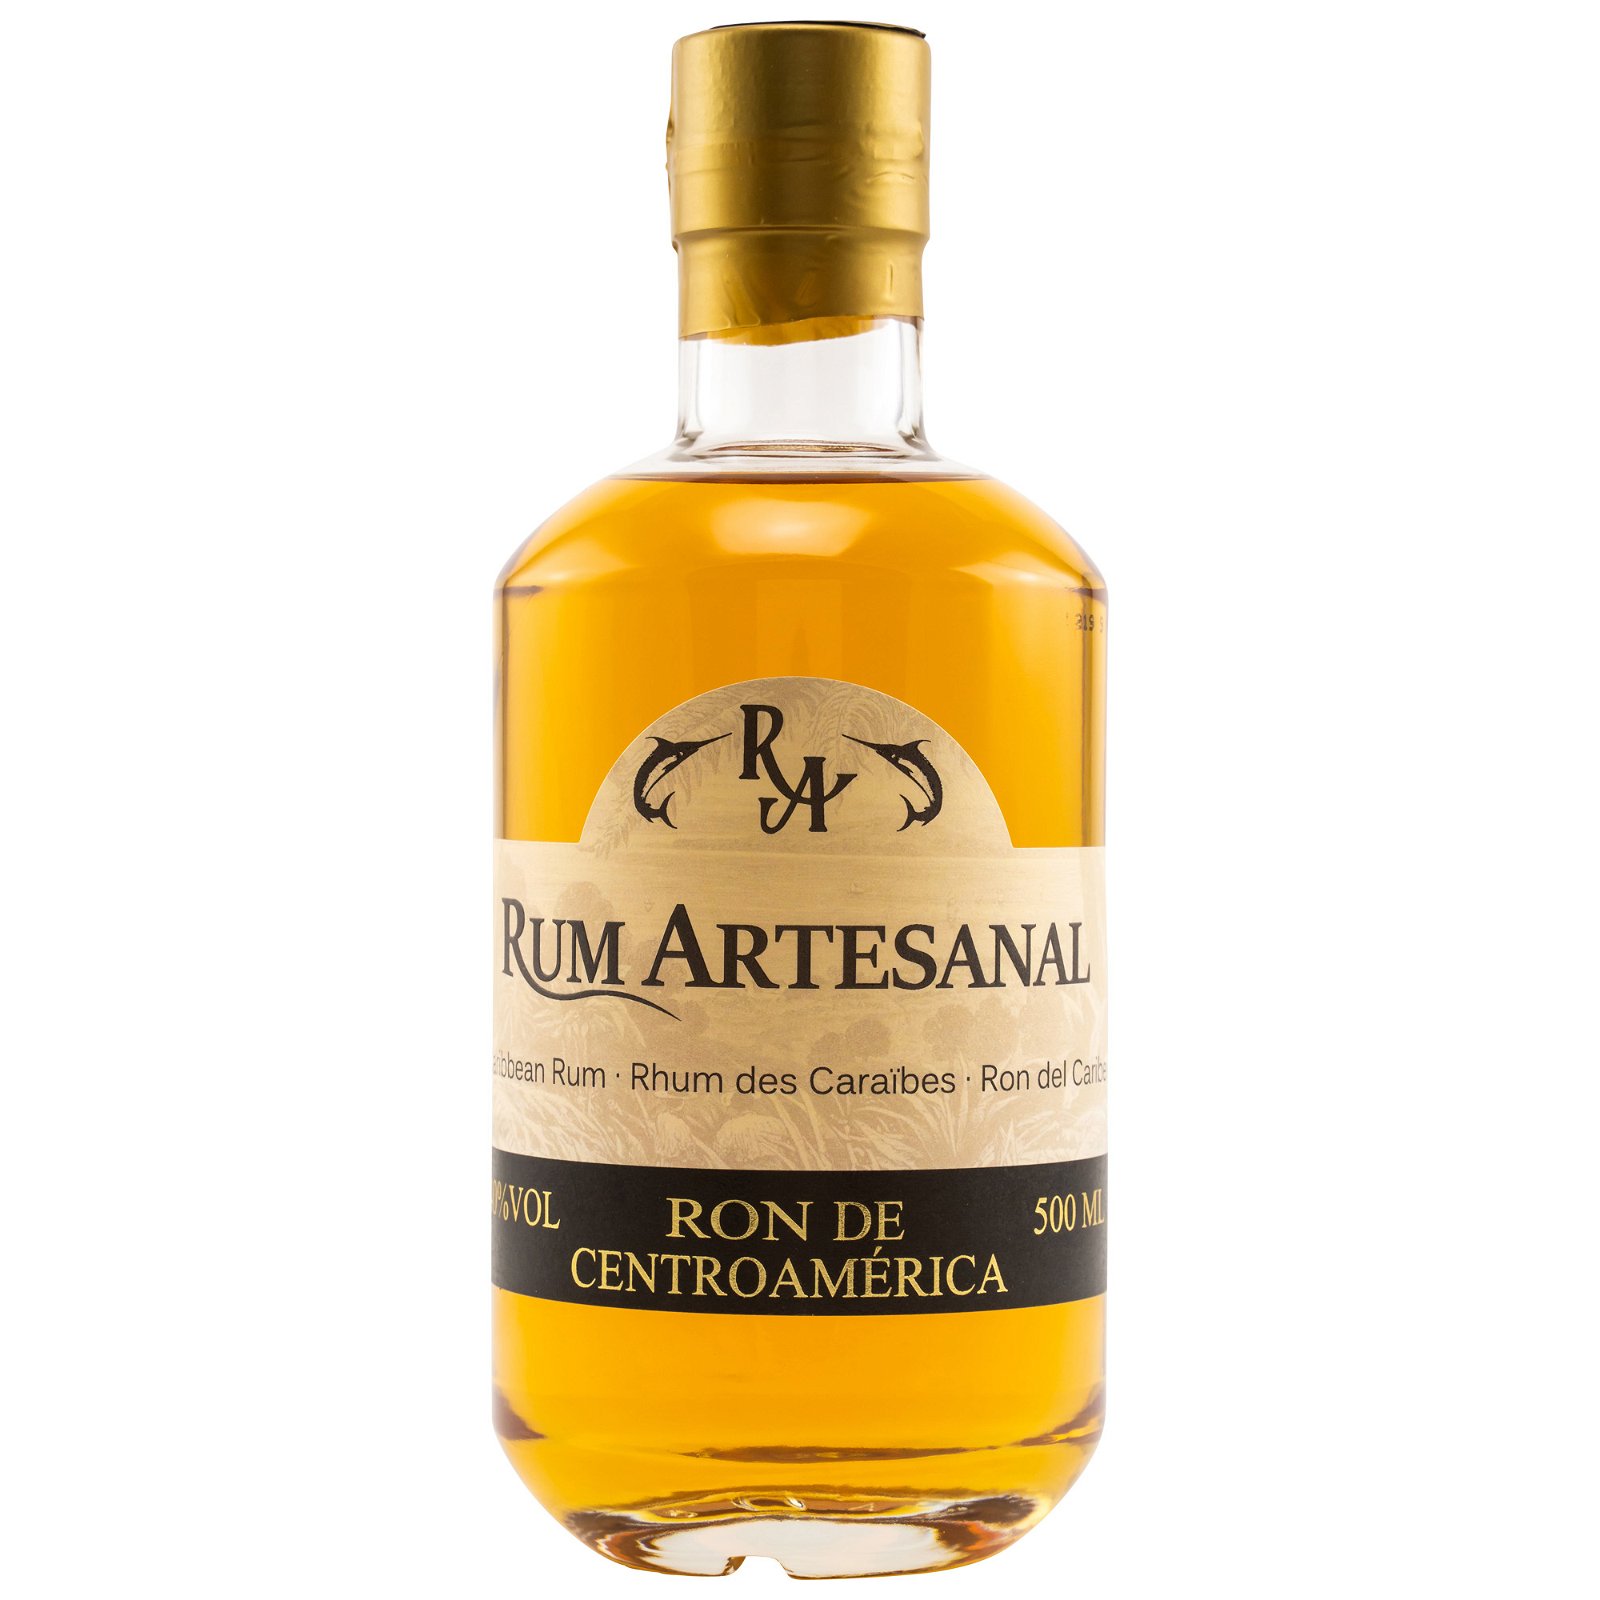 Ron de Centroamerica 3 Jahre (Rum Artesanal)